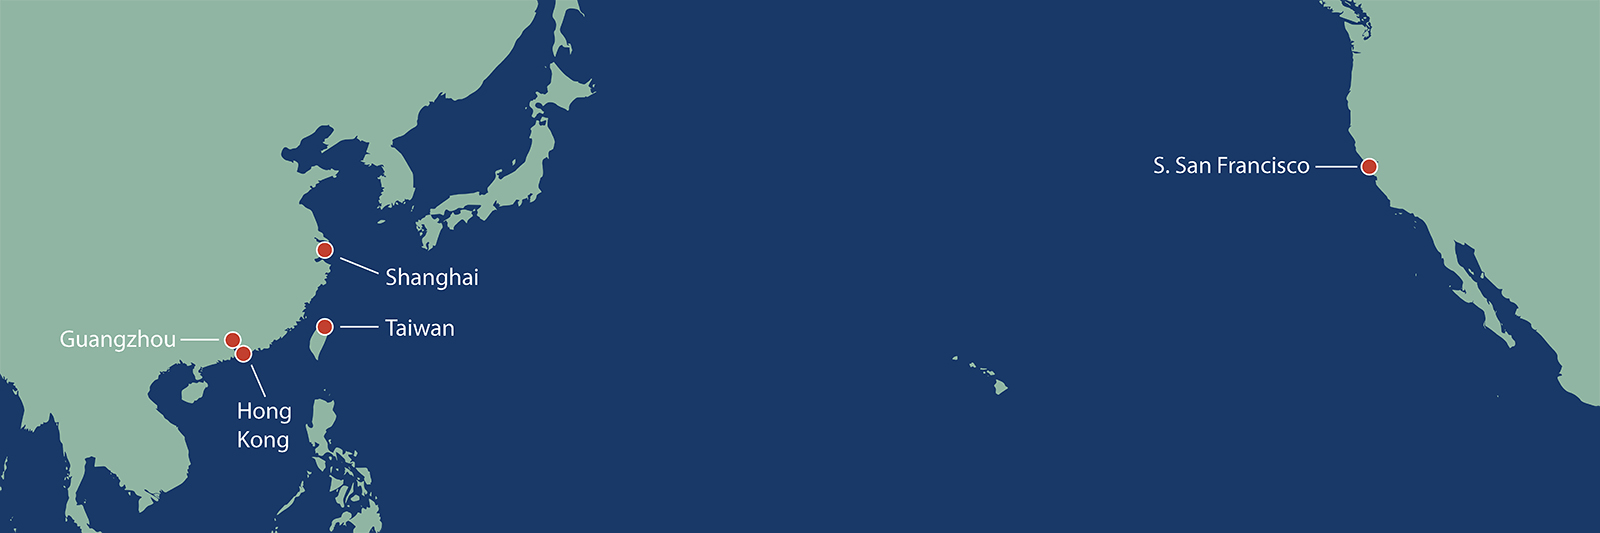 SPI West Port World Locations